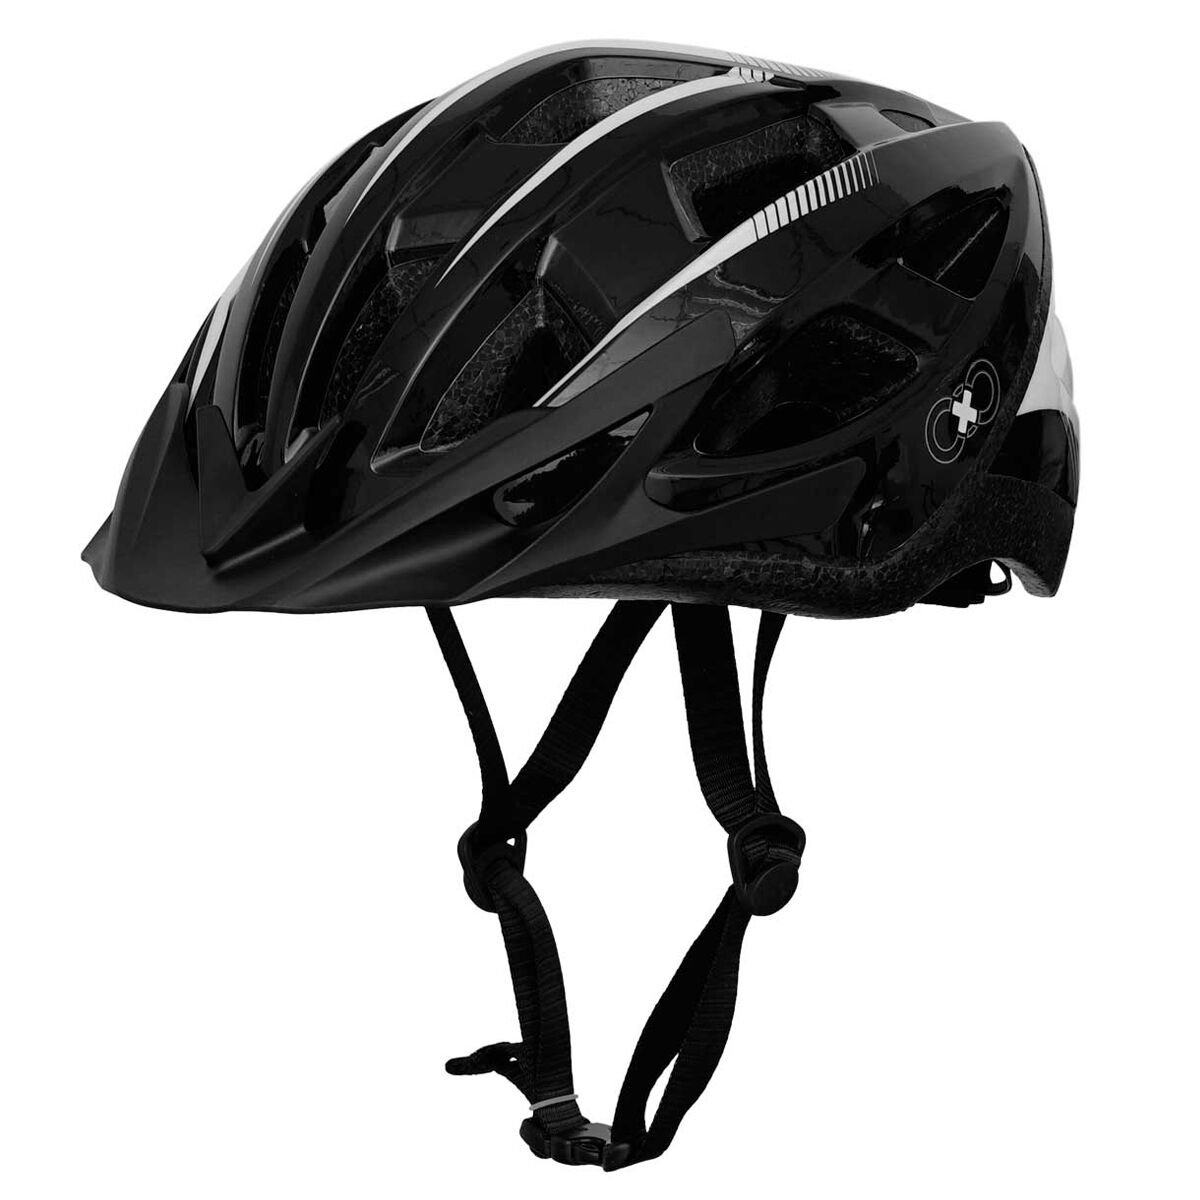 rebel bike helmets